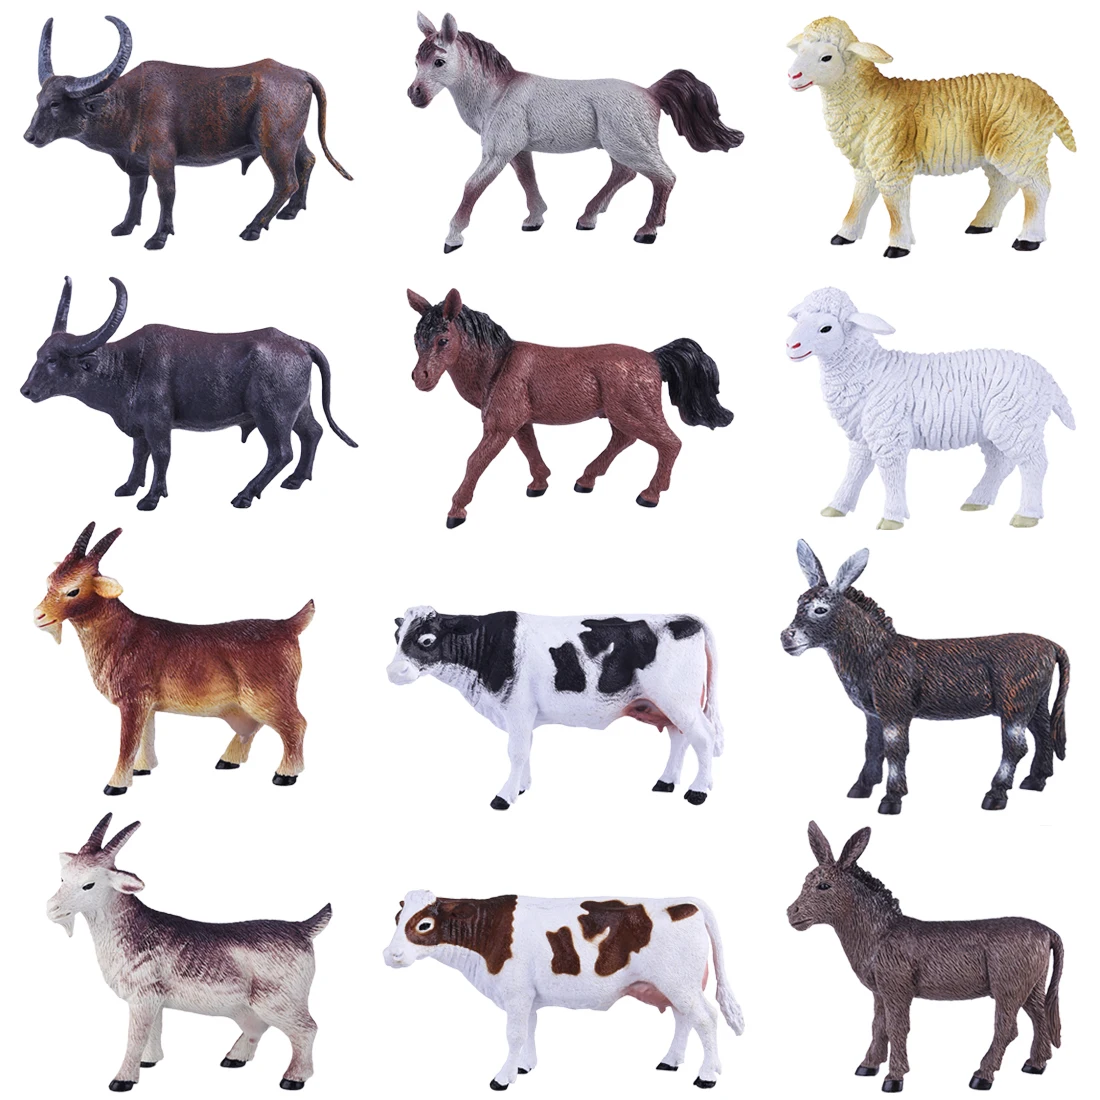 Simulation Wildlife//Zoo//Farm Animal Model Figure Goat Kids Toy Collection